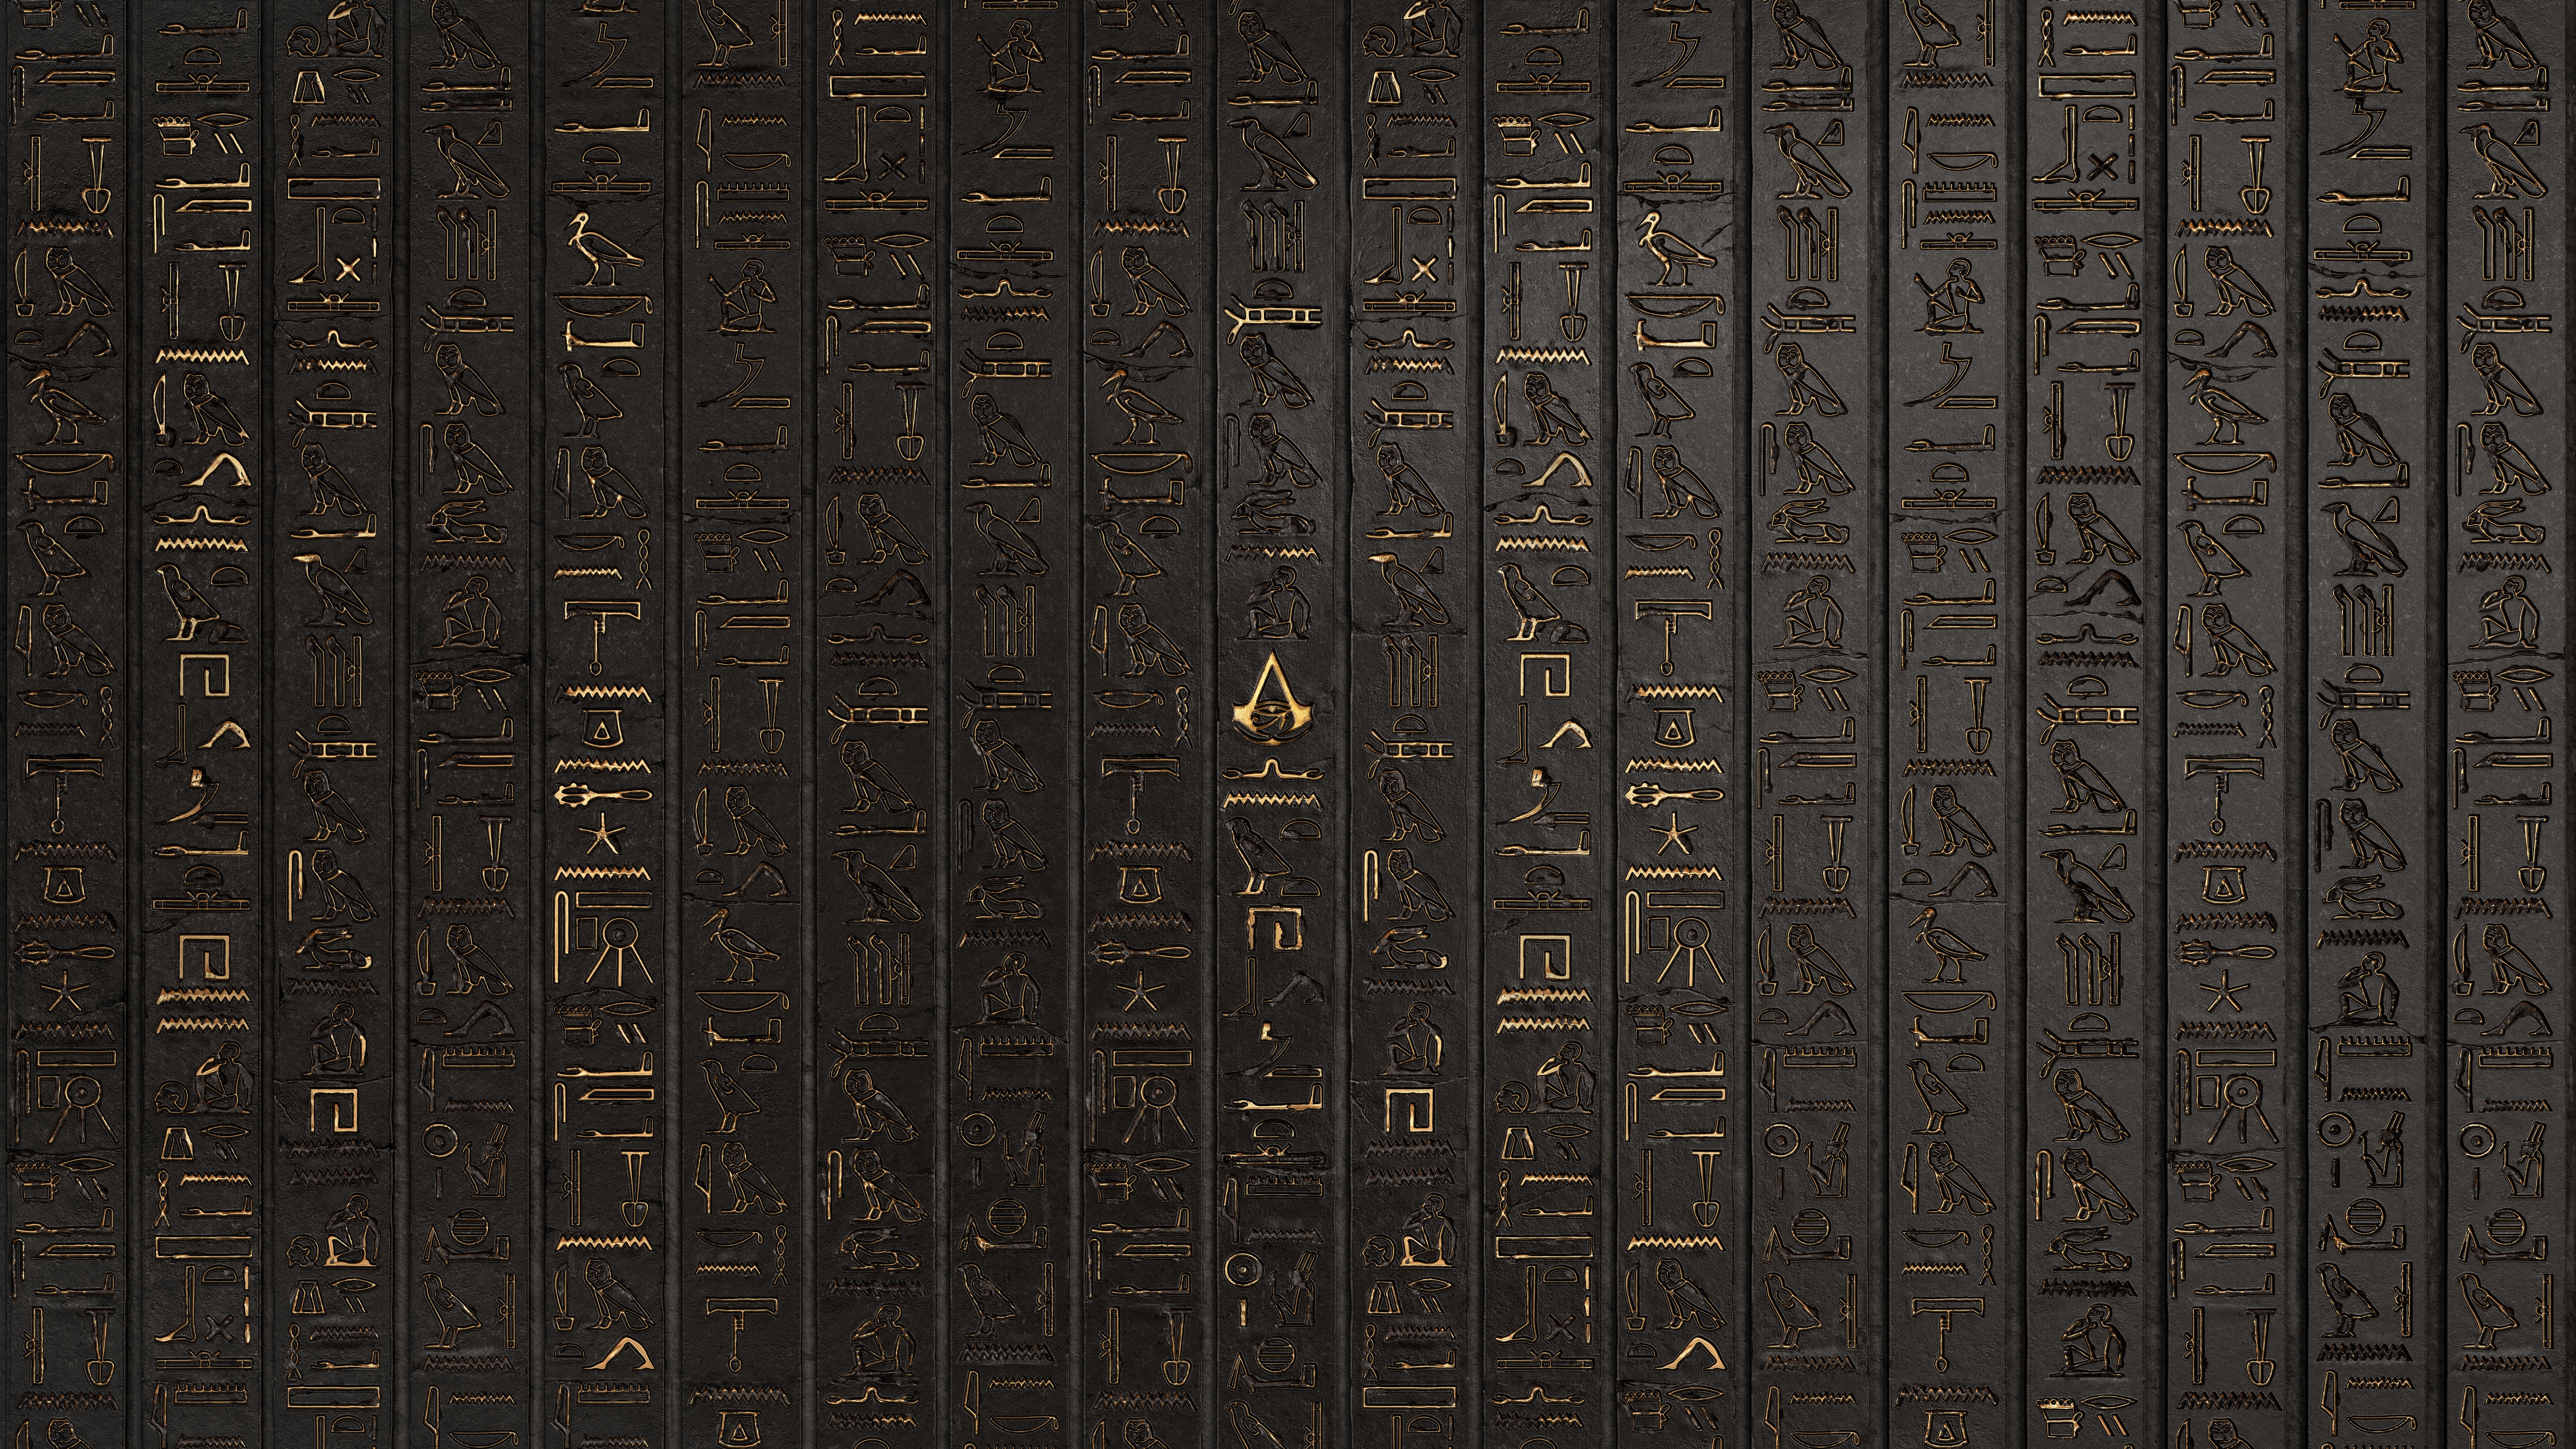 General 7680x4320 digital art artwork video games wall hieroglyphs engraving symbols